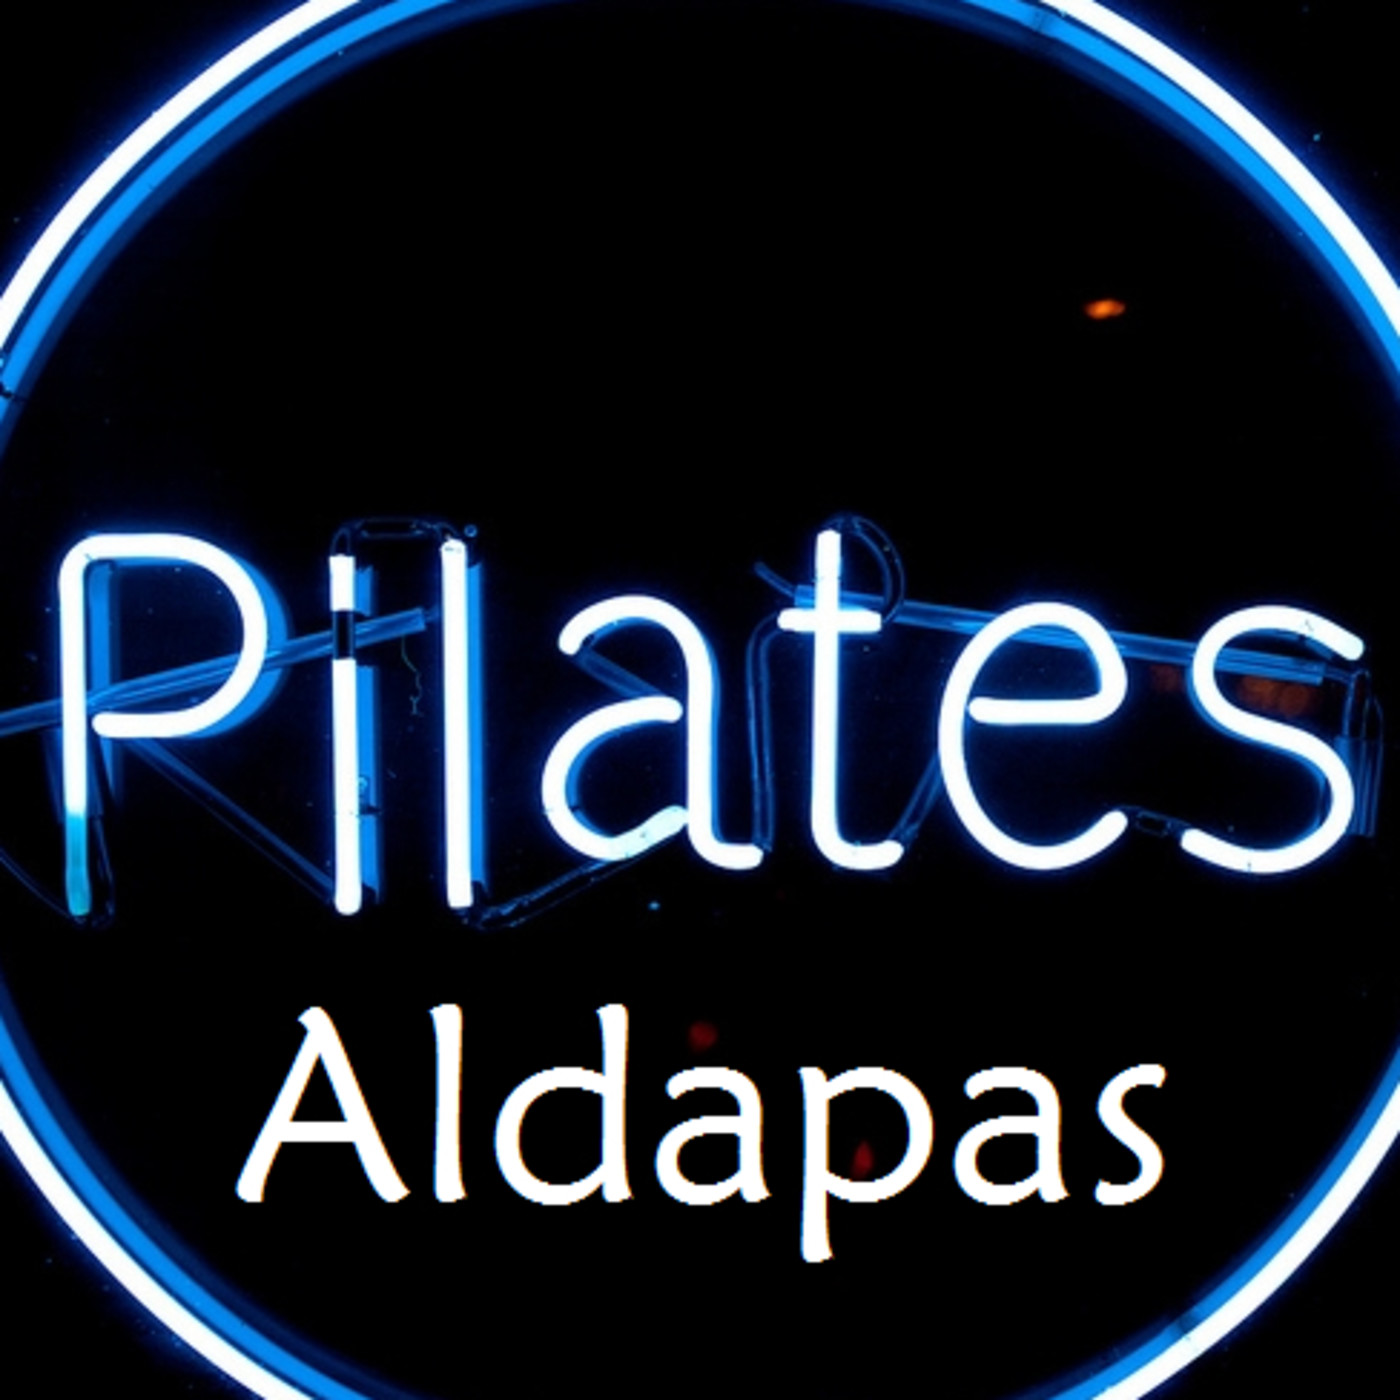 Clases Pilates Aldapas-Algorta